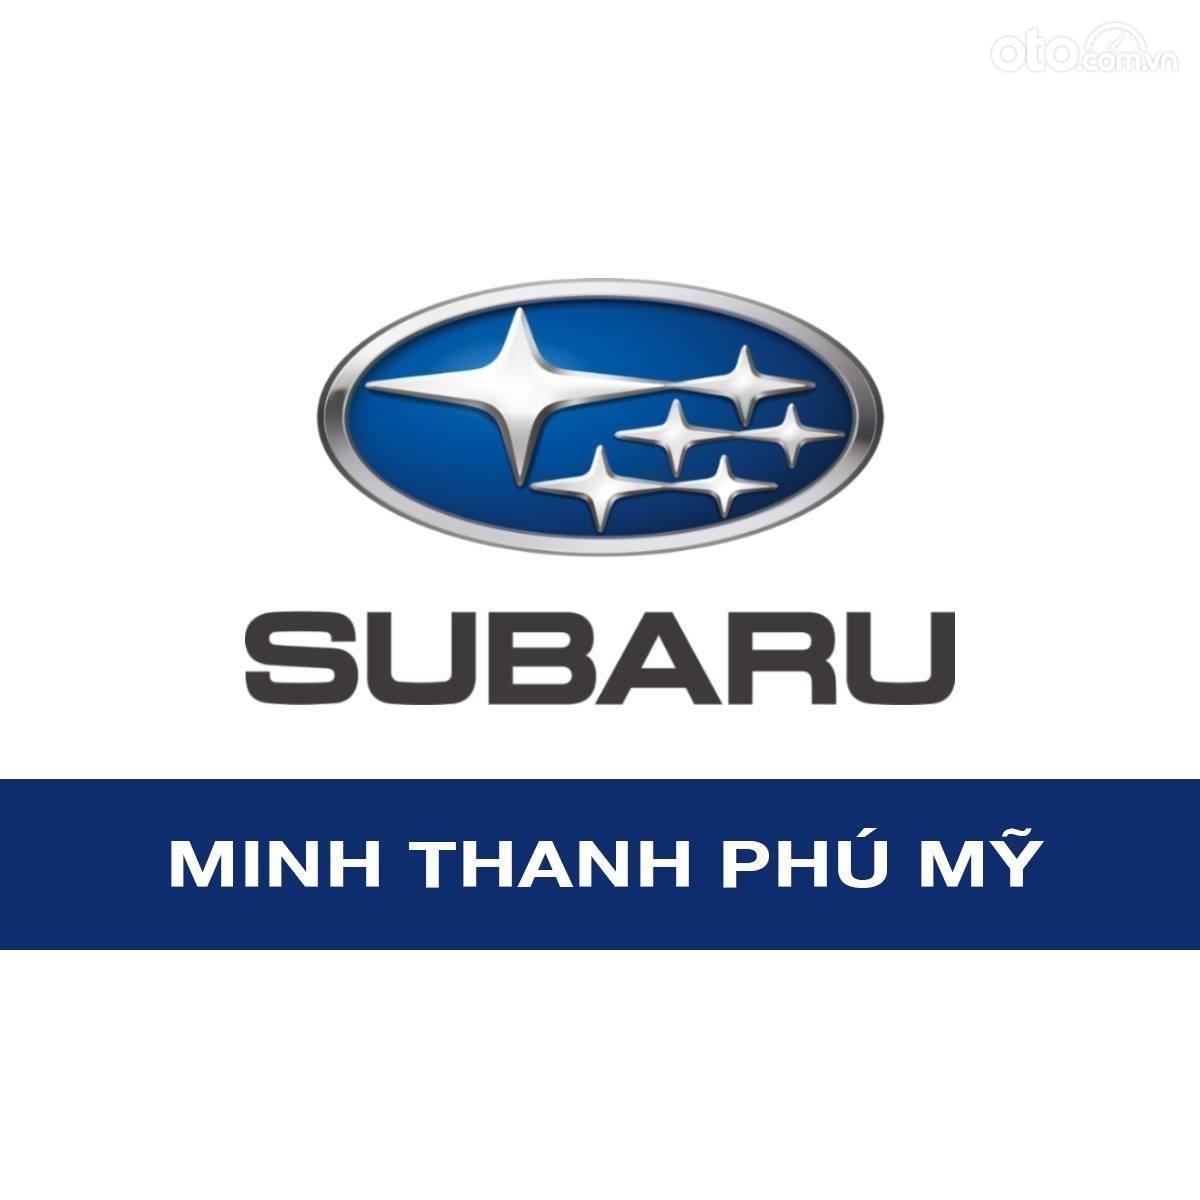 Subaru Minh Thanh